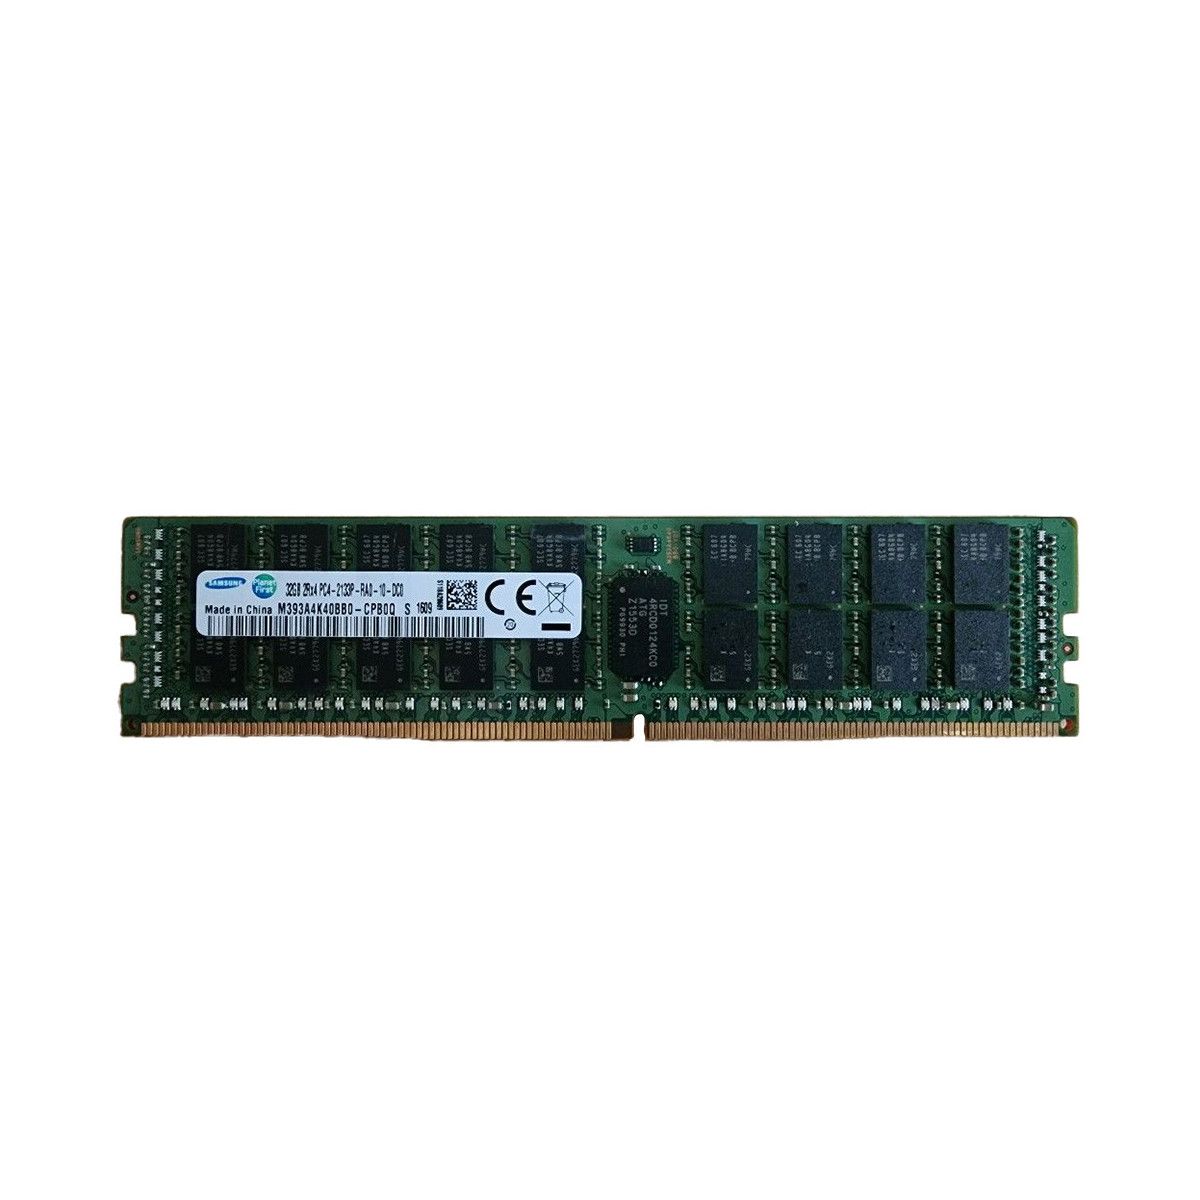 752370-091-MS - Memstar 1x 32GB DDR4-2133 RDIMM PC4-17000P-R - Mem-Star Kompatibel OEM Speichermedien 1 - Memstar 